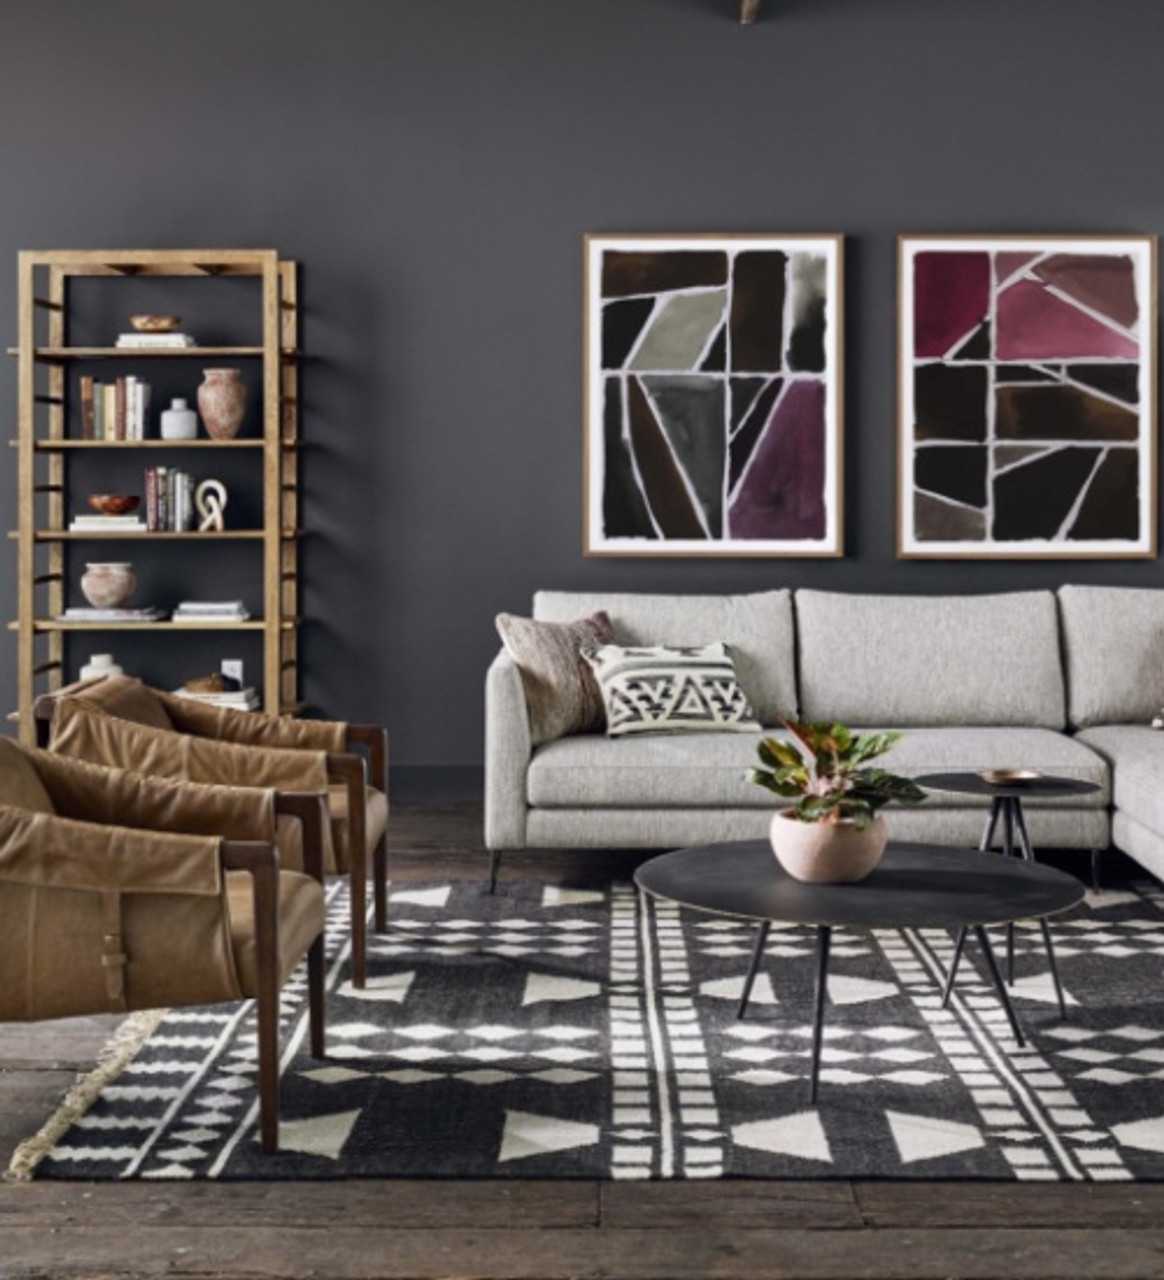 Shop The Look: Artisan Eclectic Loft Living Room